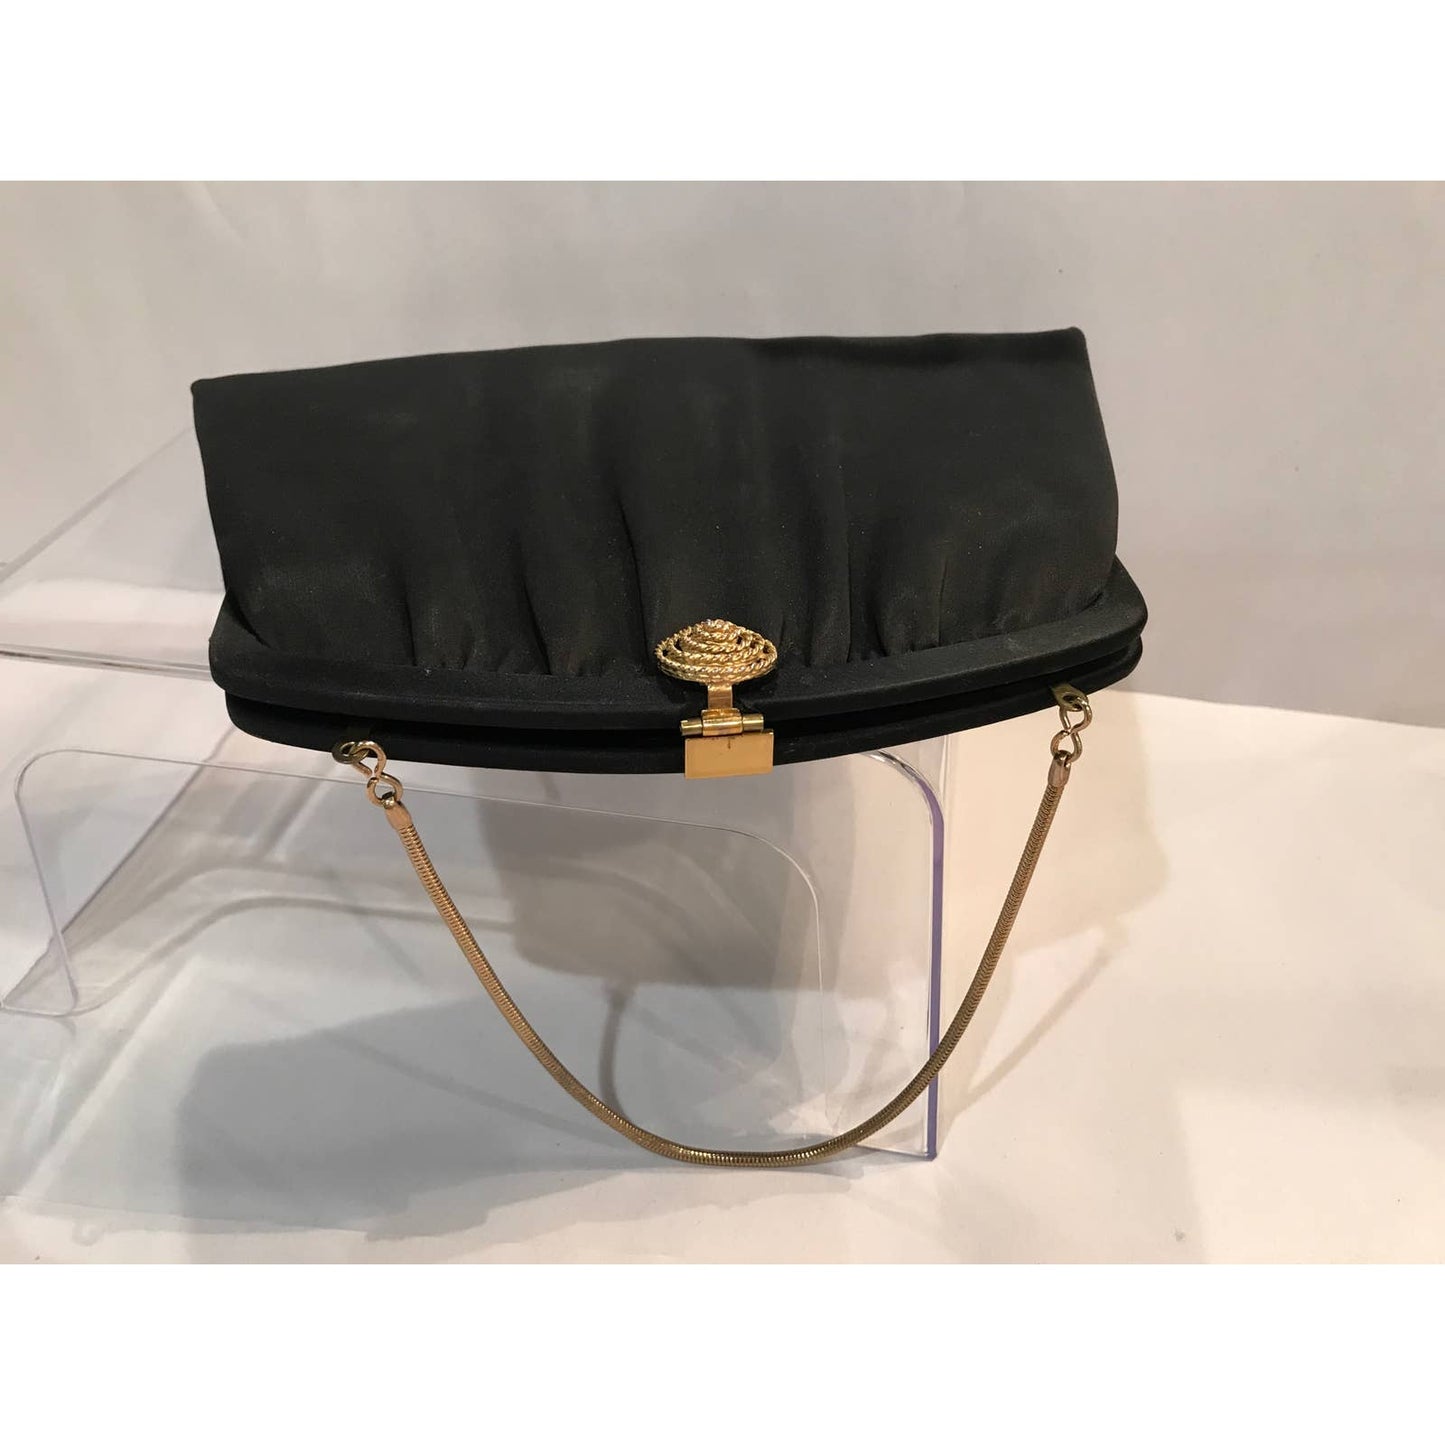 Vtg Black Hand Bag with coiled wrist strap